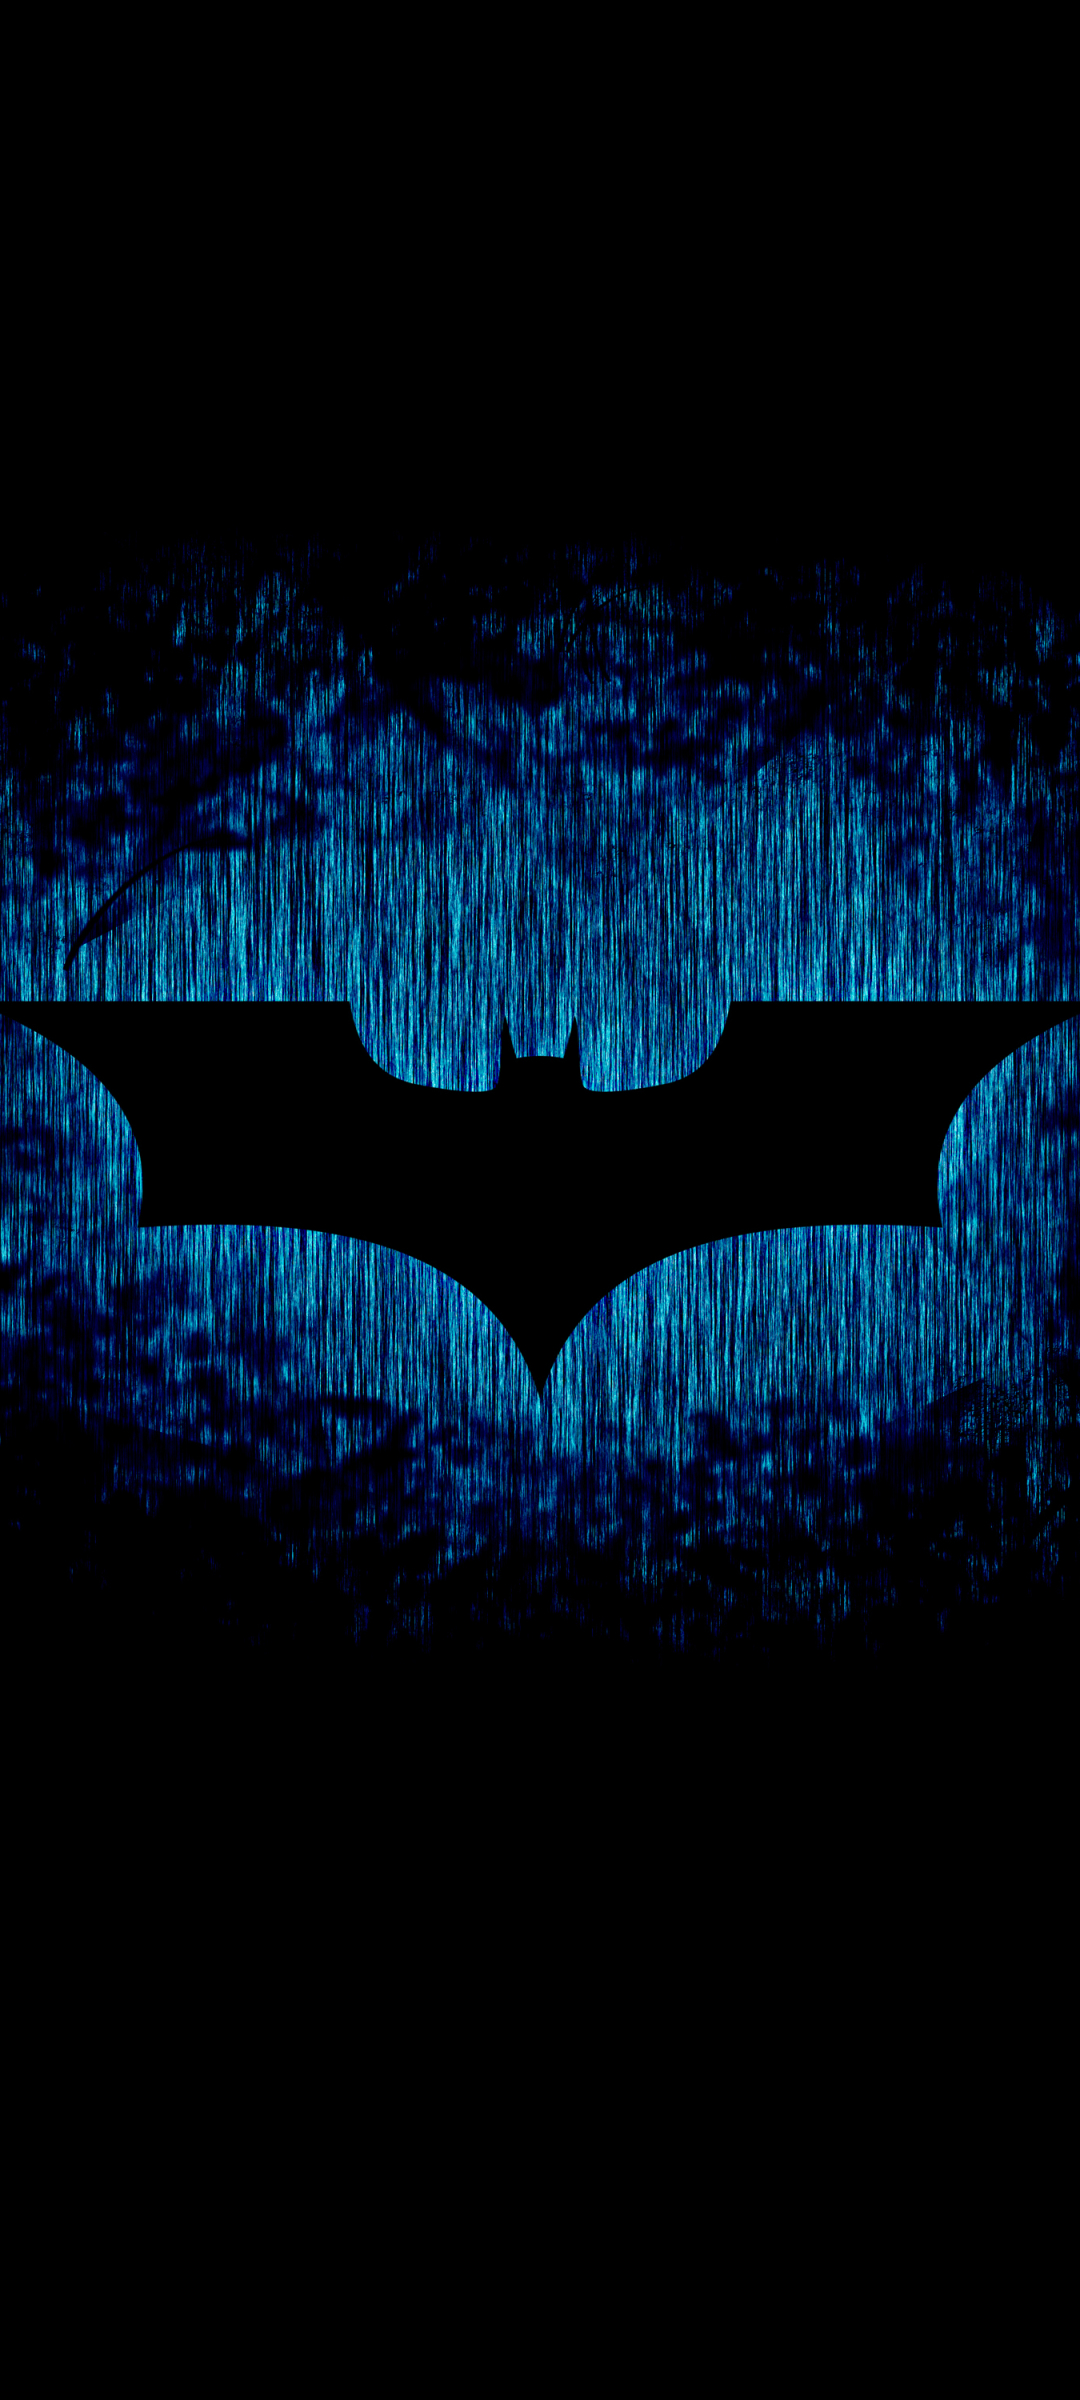 Descarga gratuita de fondo de pantalla para móvil de Historietas, The Batman, Símbolo De Batman, Hombre Murciélago.